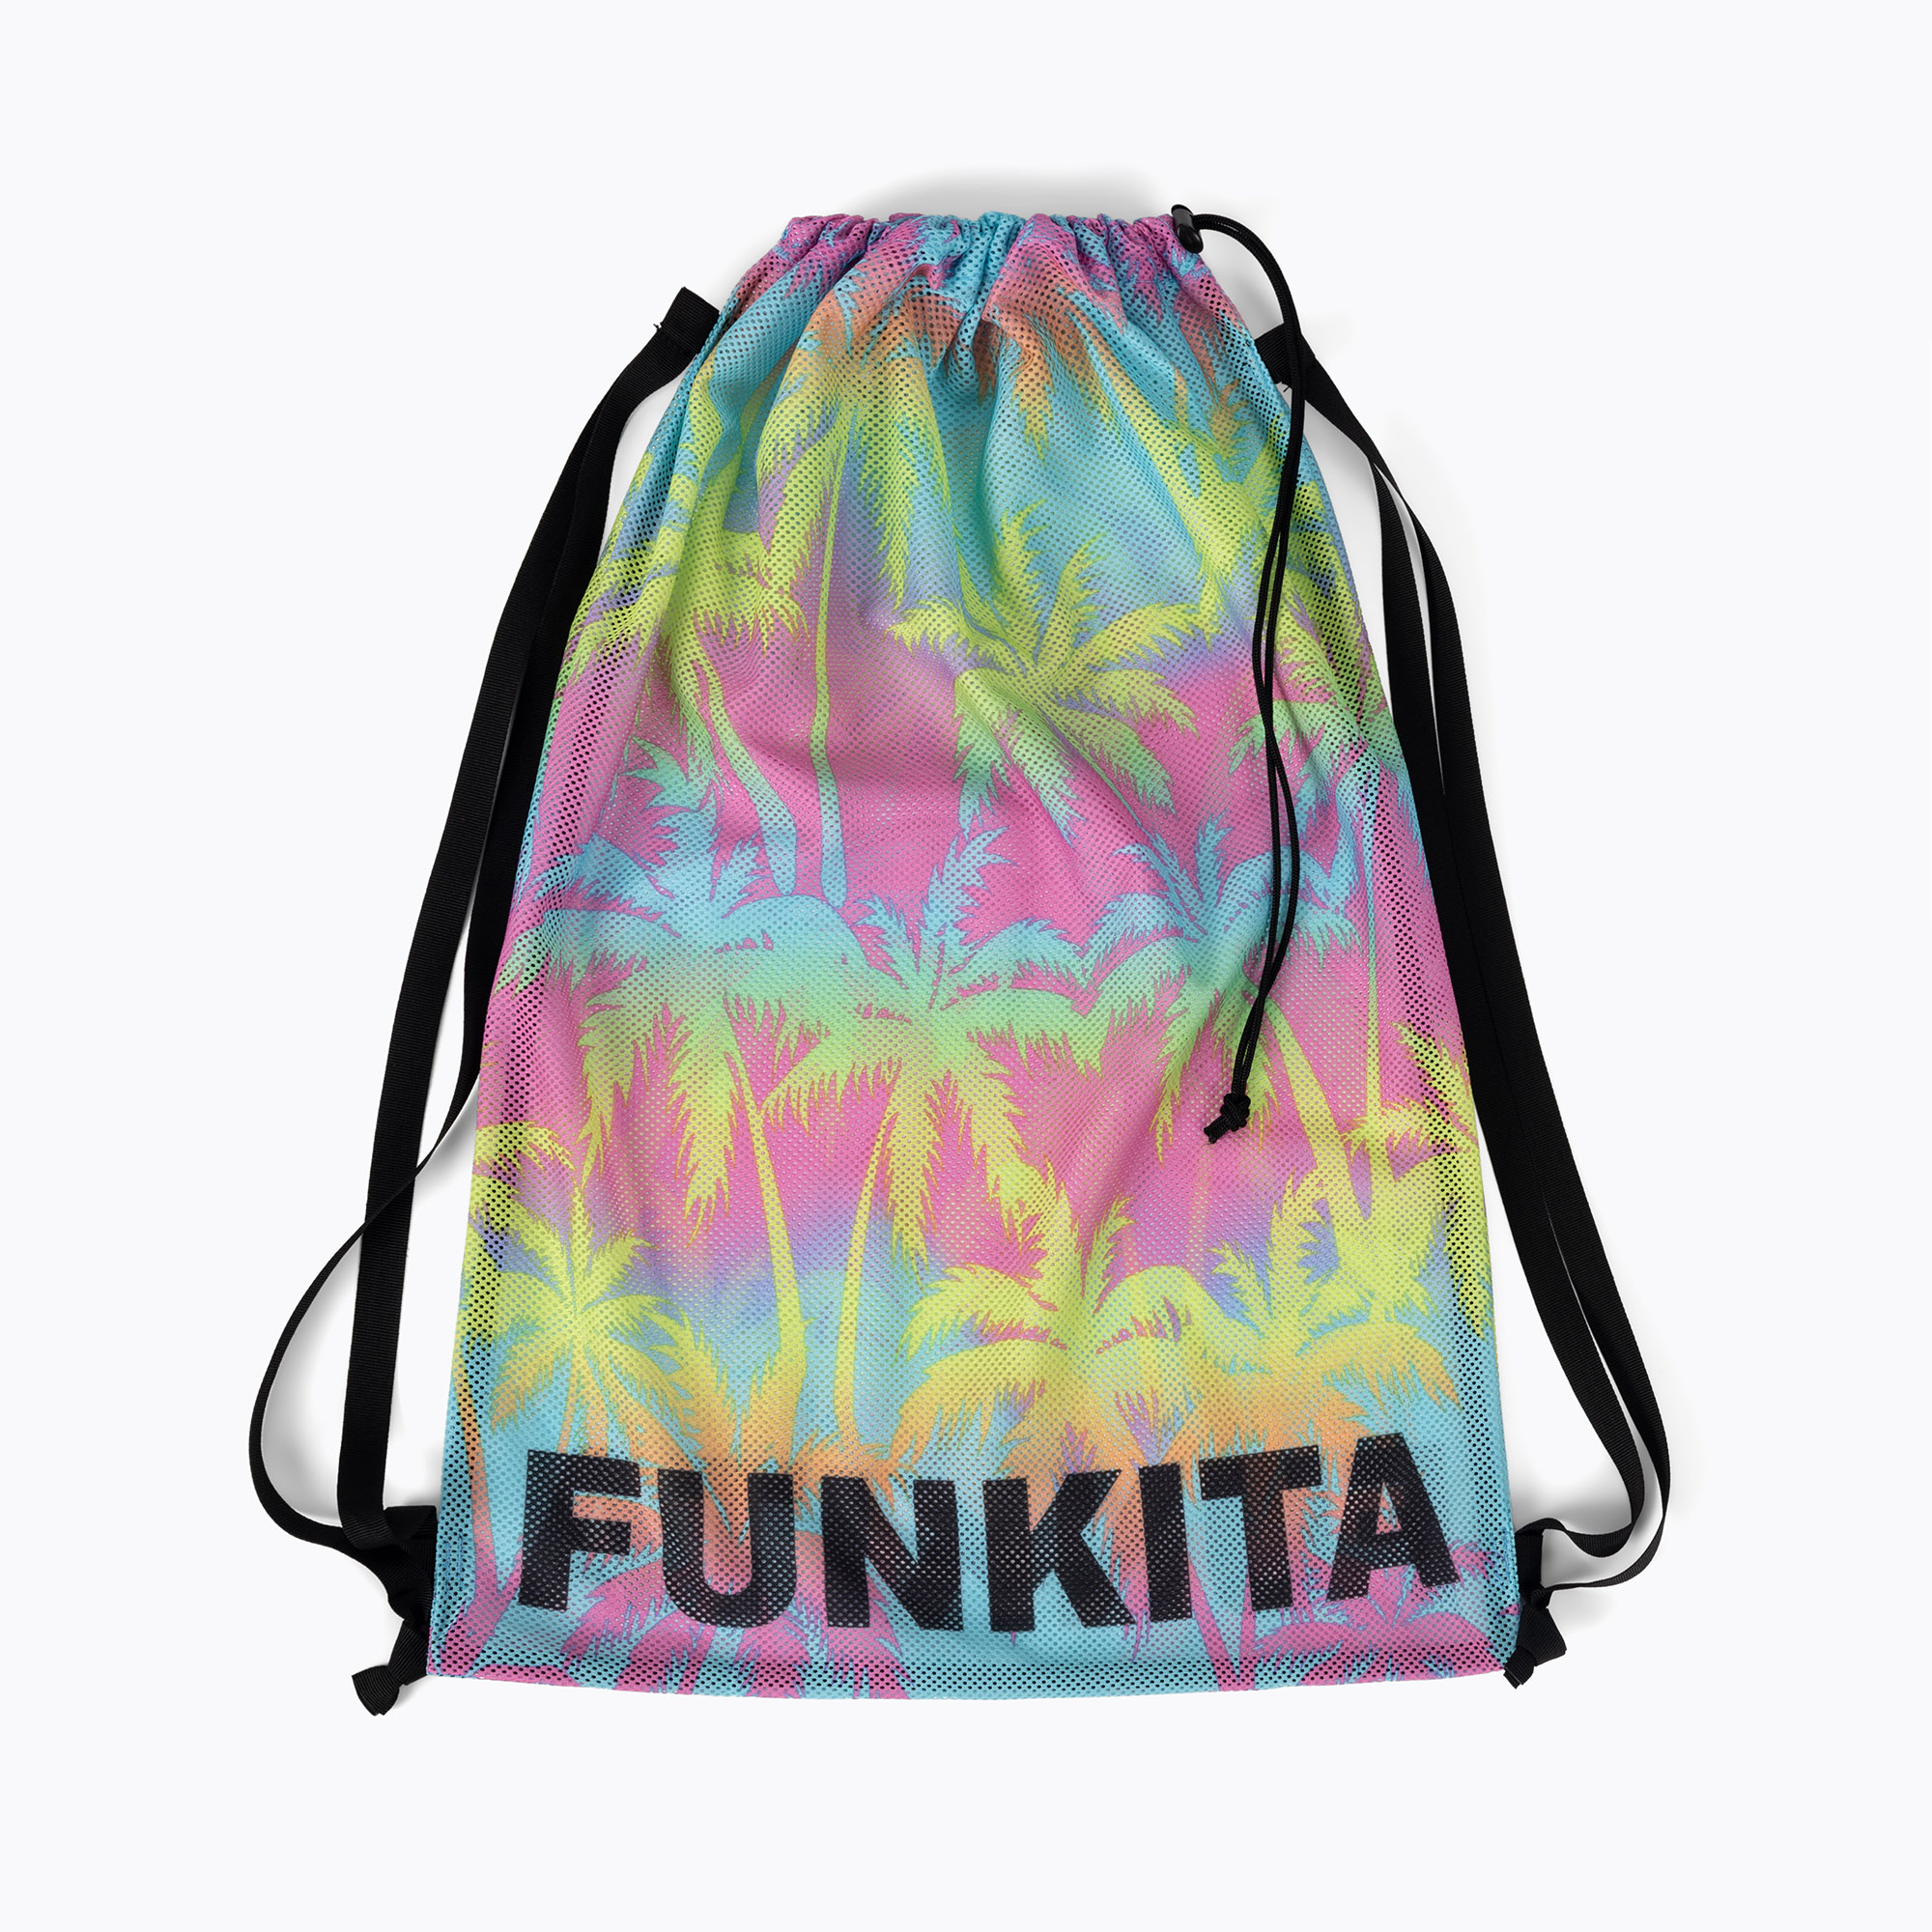 Funkita Accessories Mesh Gear Bag pink-blue FKG010A7131700